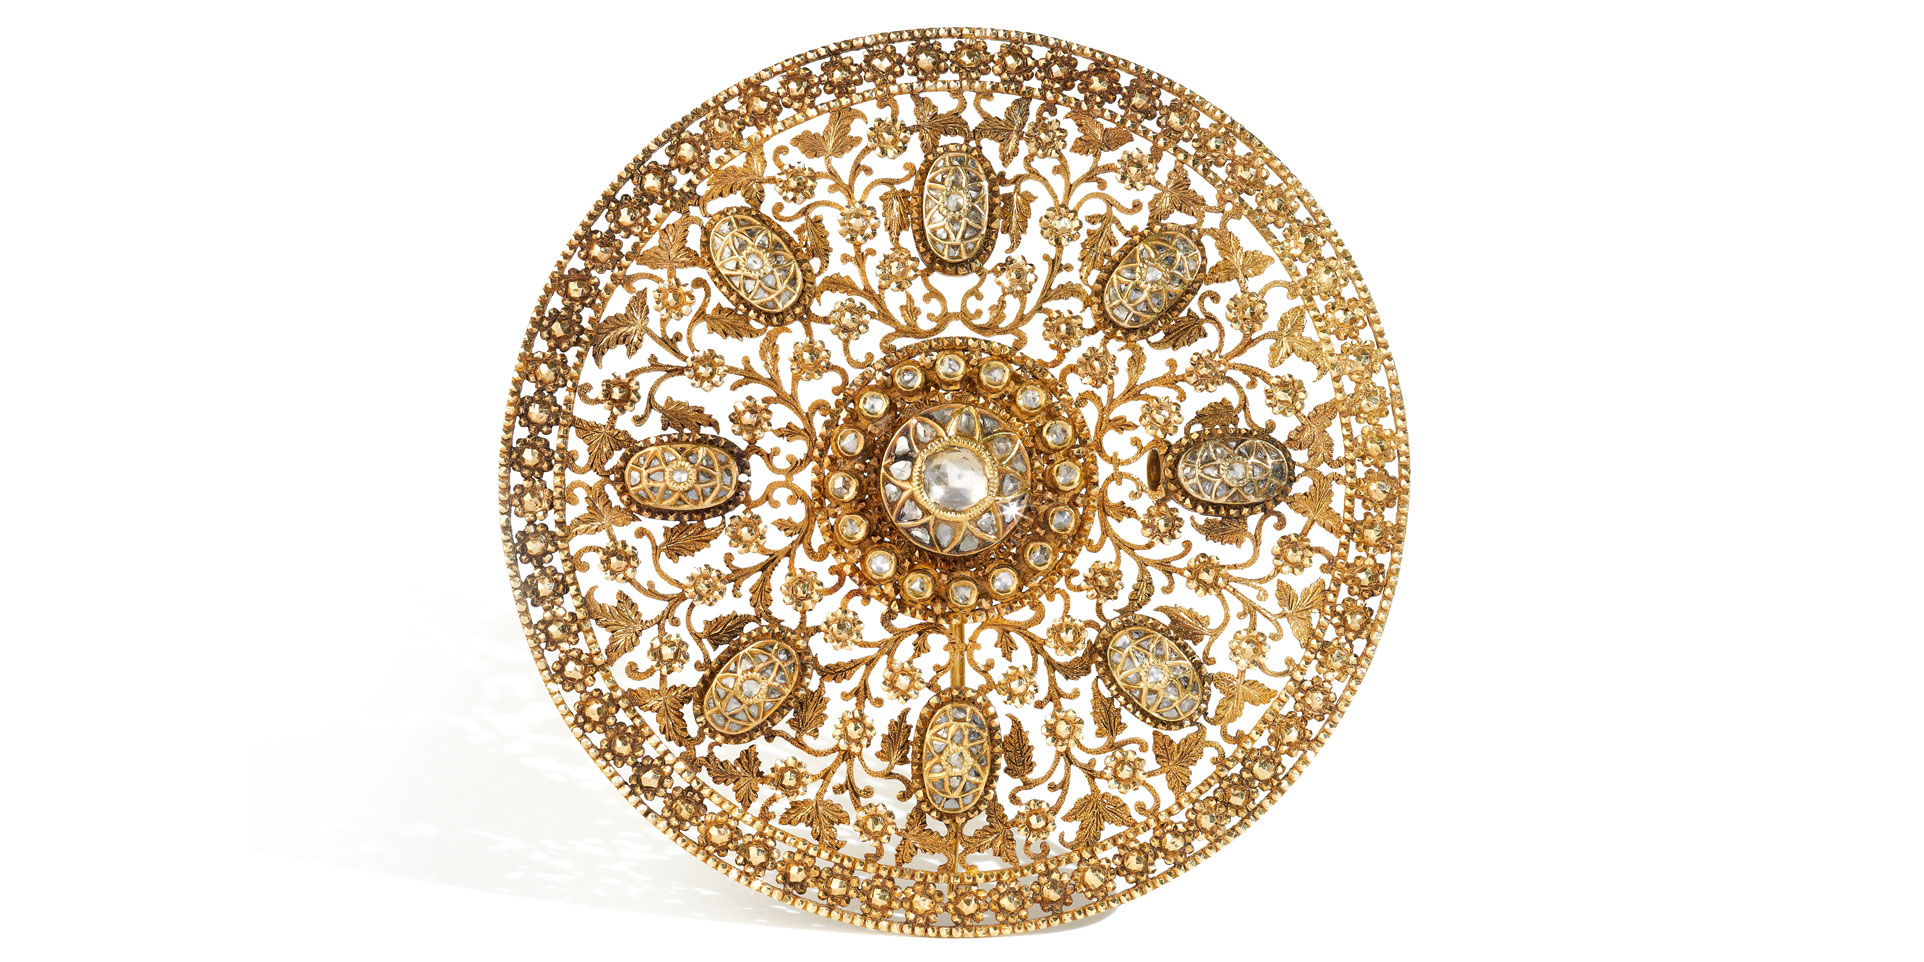 Al Thani: Gold and diamond hair ornament